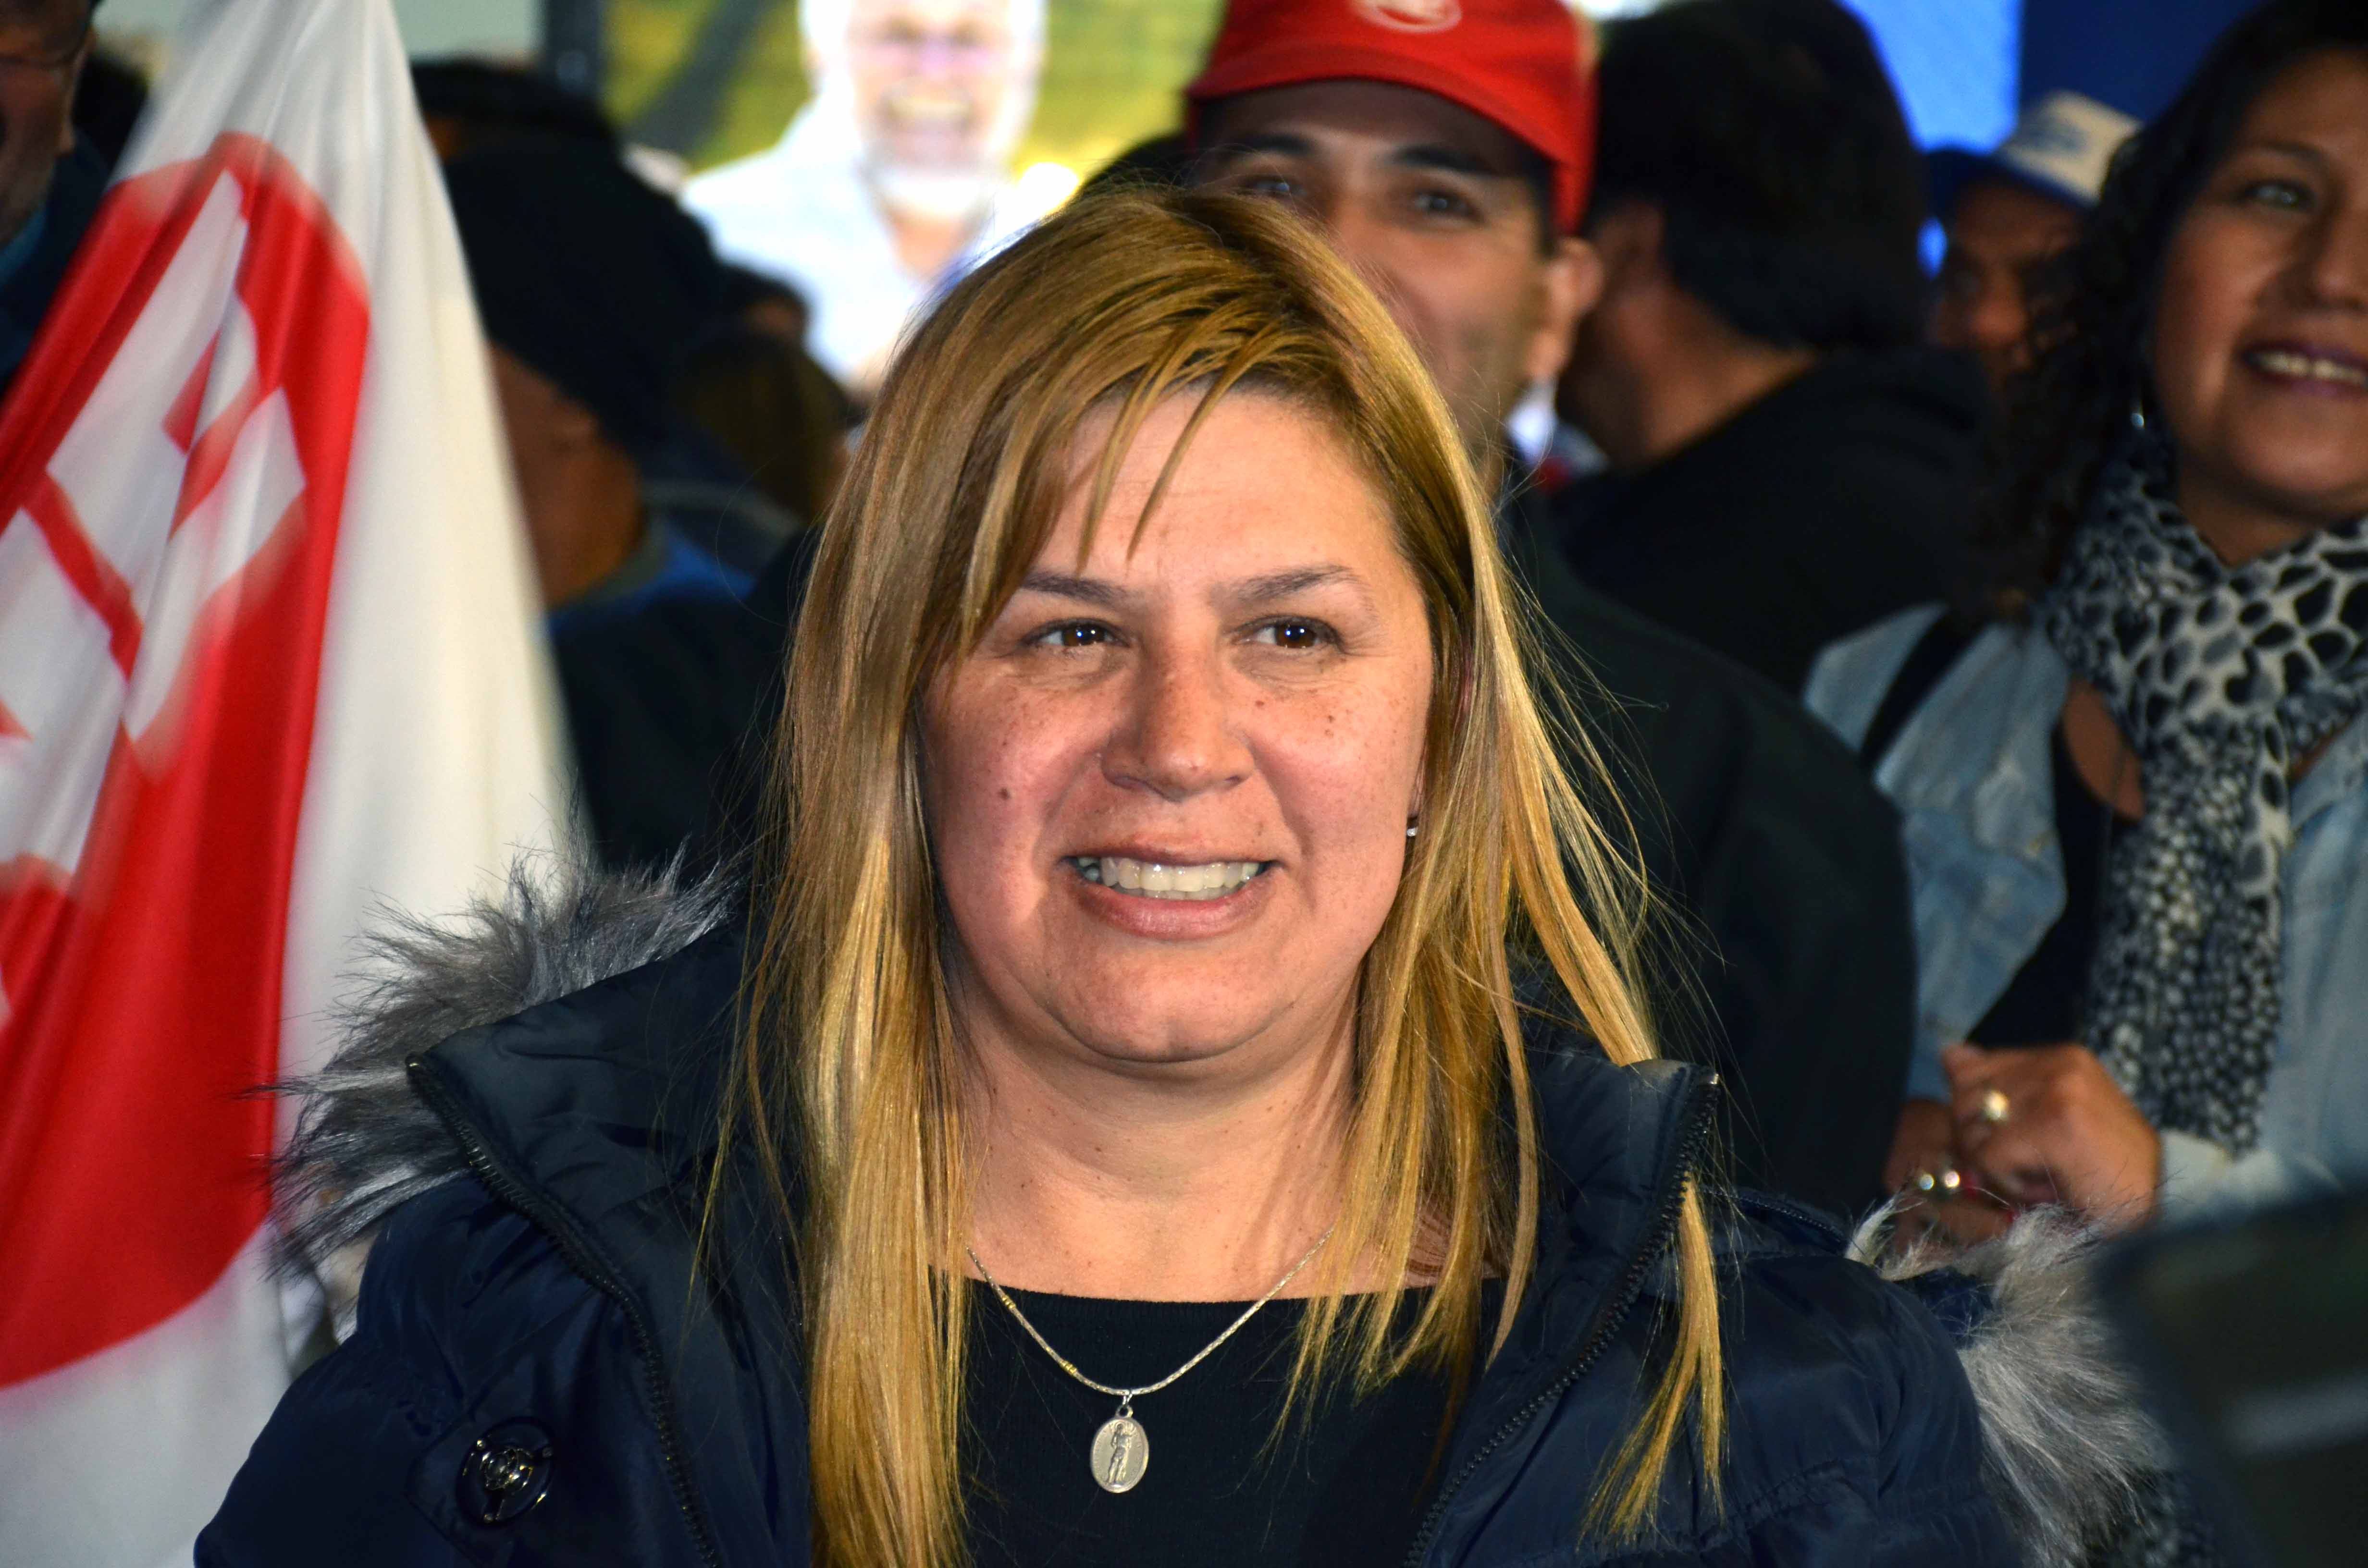 La intendenta electa Gloria Ruiz festejó ayer afuera del local partidario Foto Yamil Regules)